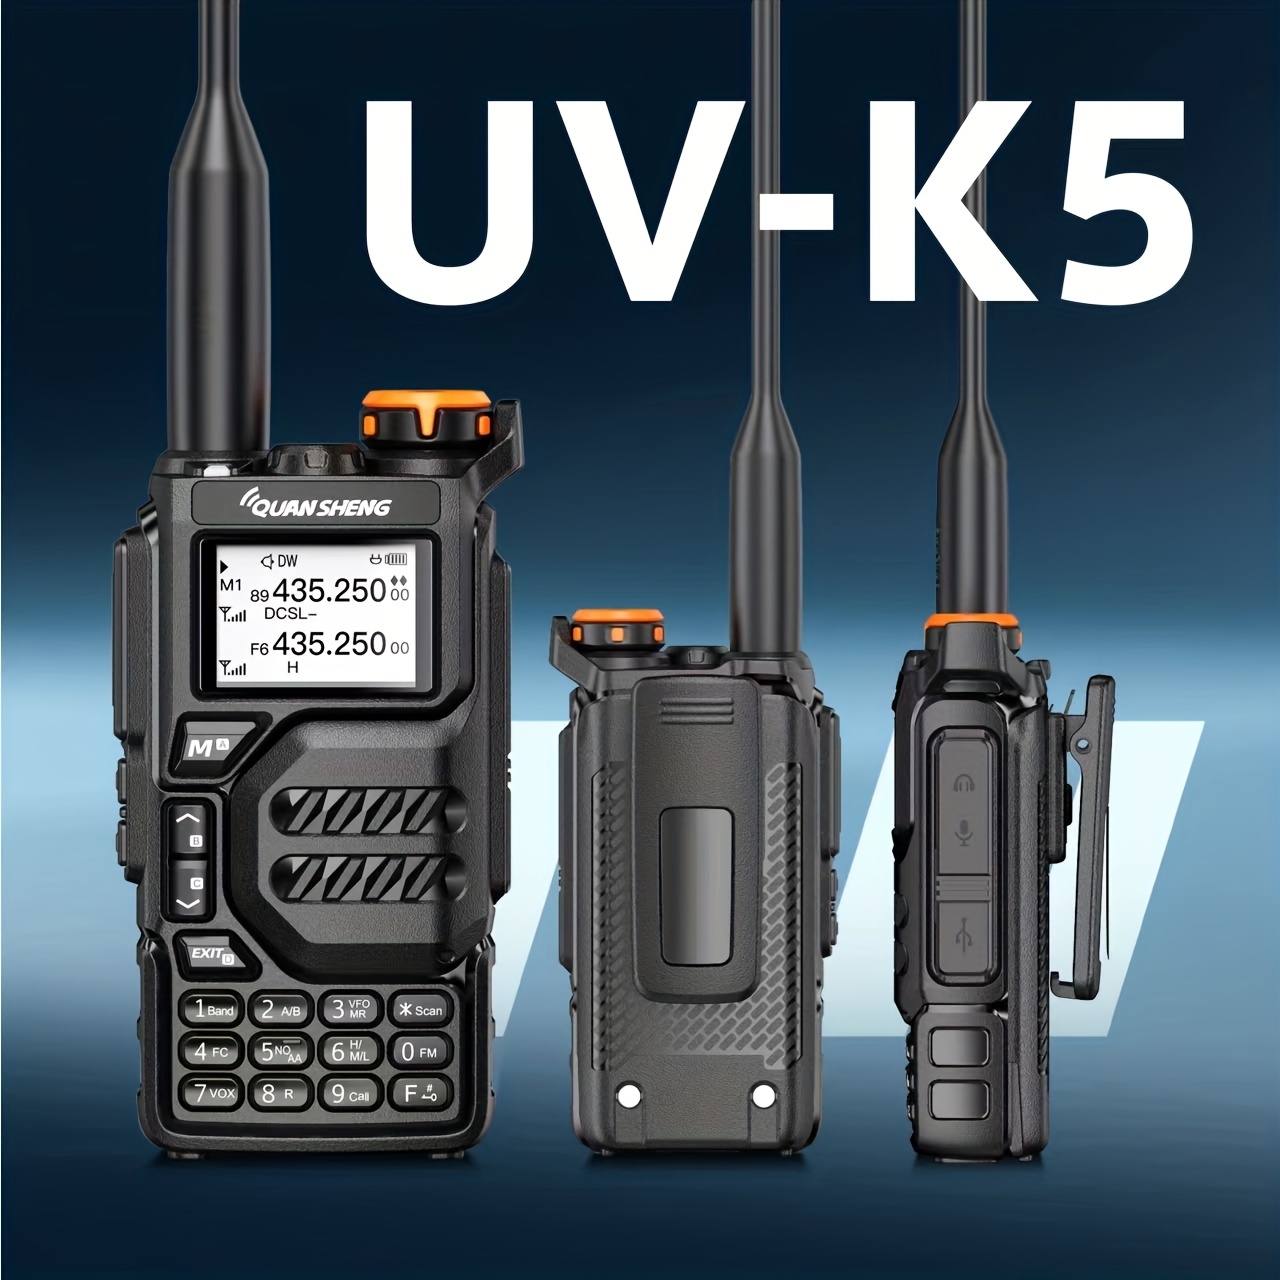 Quansheng UV-K5 5W Handled Ham Radio Two Way Radio NOAA Emergency Weather  Receiver With Type-C Charging Cable, Headset (Black)